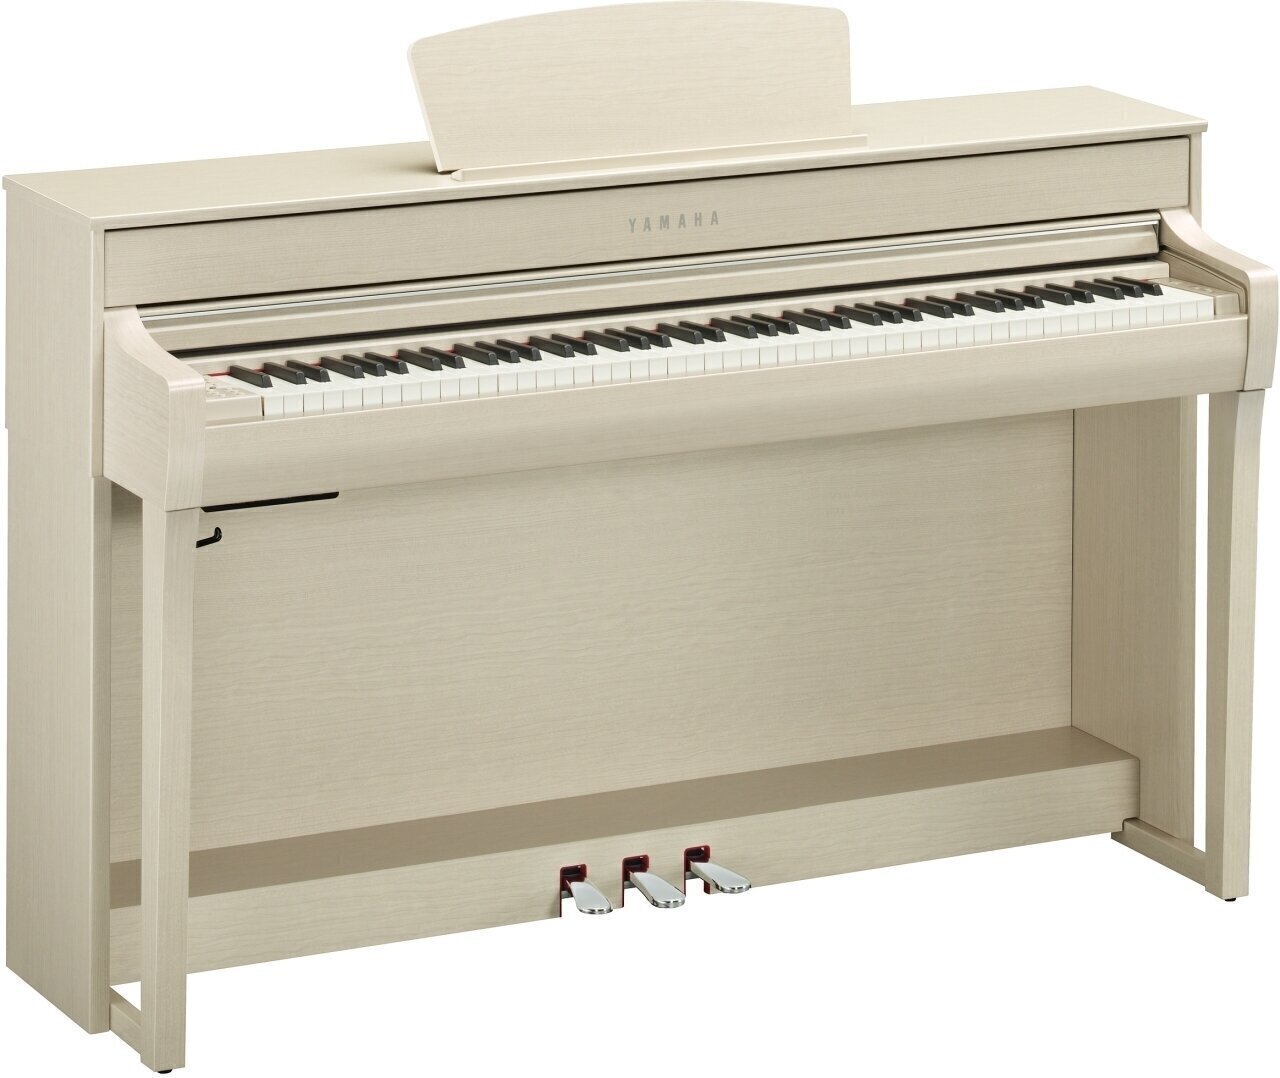 Piano digital Yamaha CLP 735 White Ash Piano digital